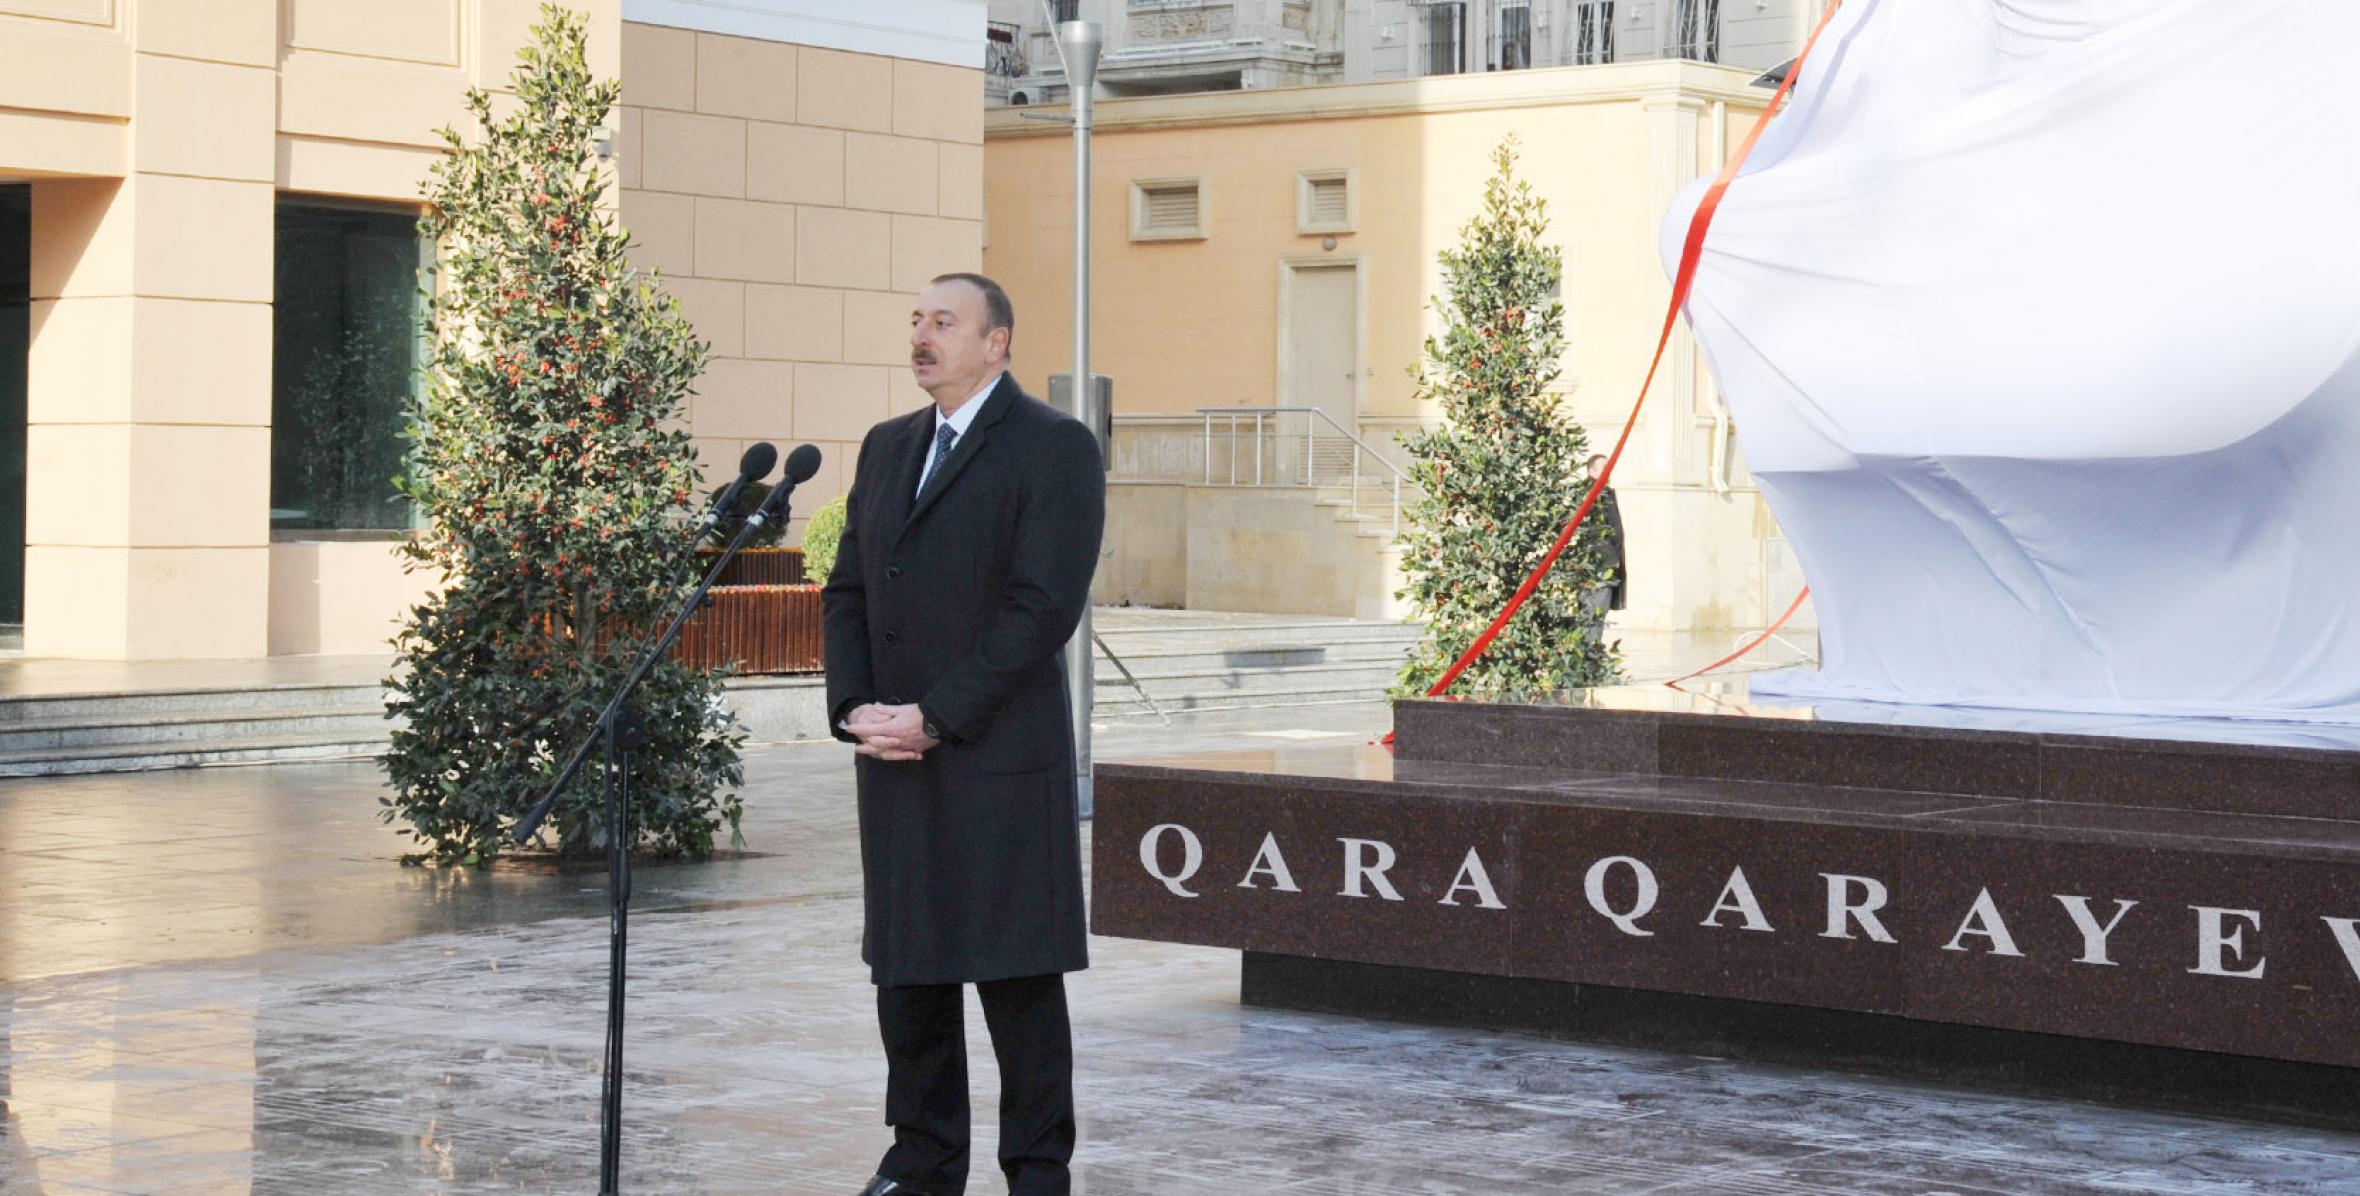 Ilham Aliyev unveiled the statue of outstanding composer Gara Garayev in Baku